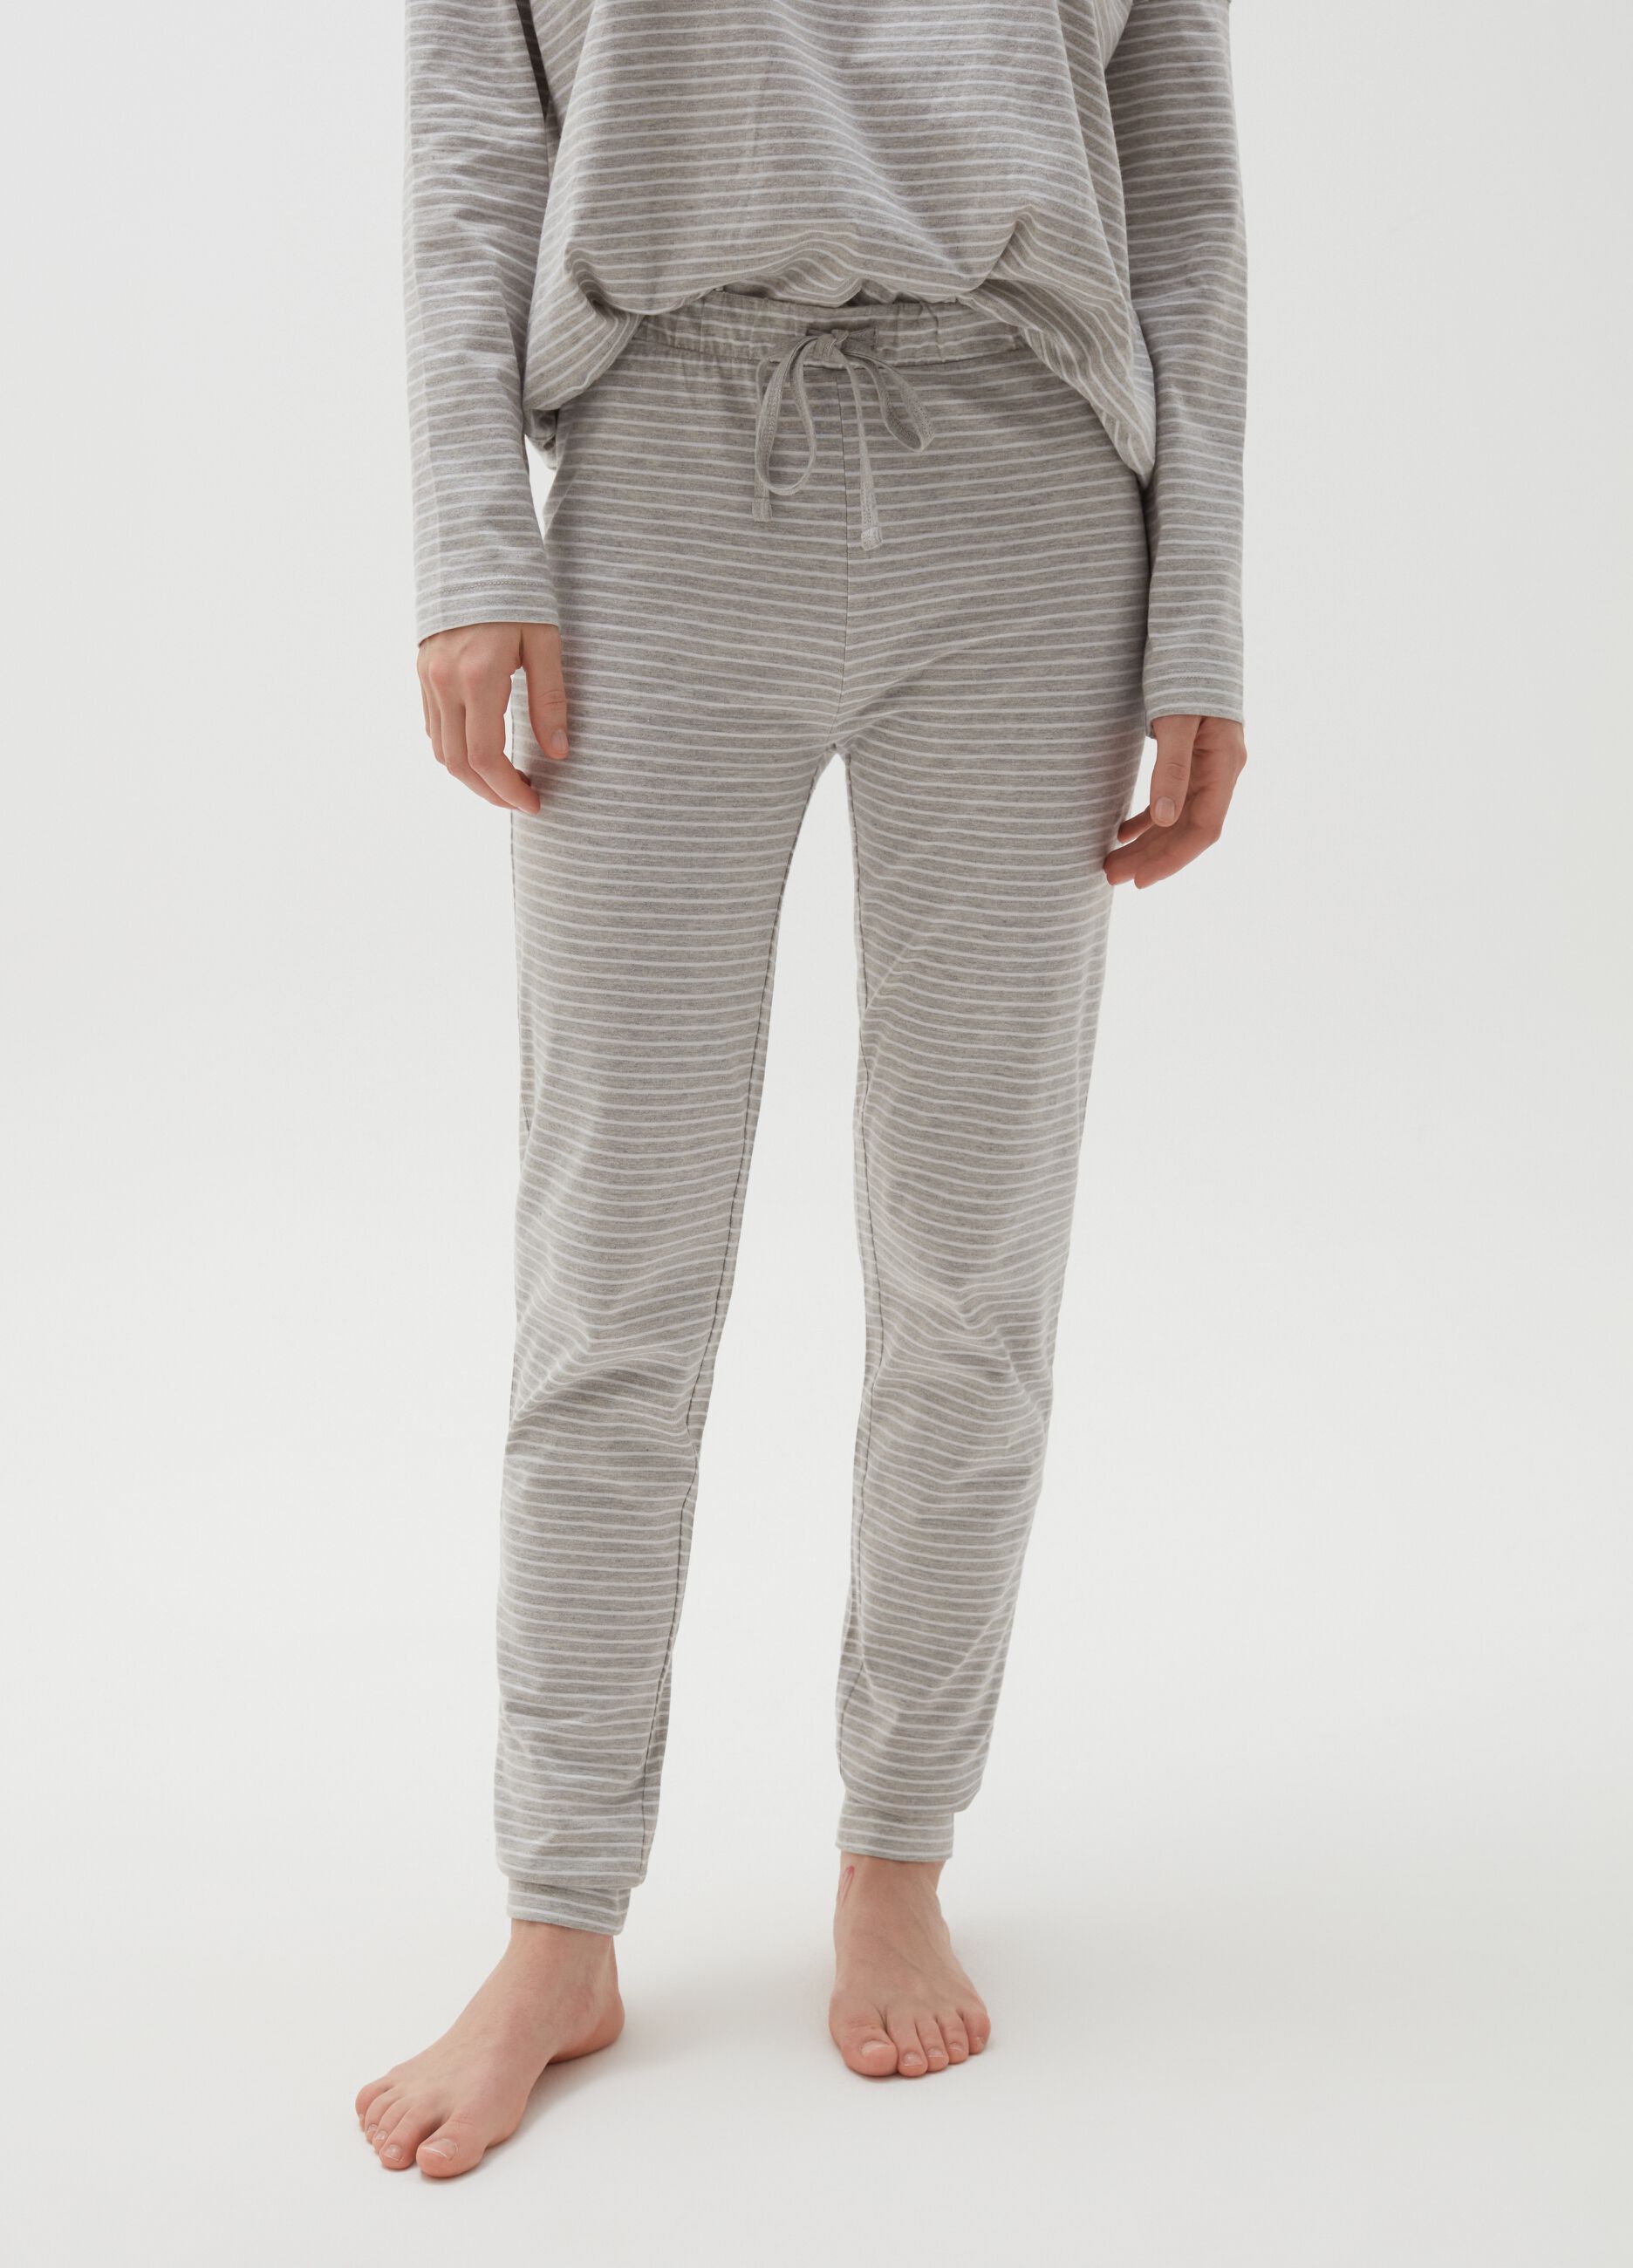 Striped cotton and viscose pyjama bottoms